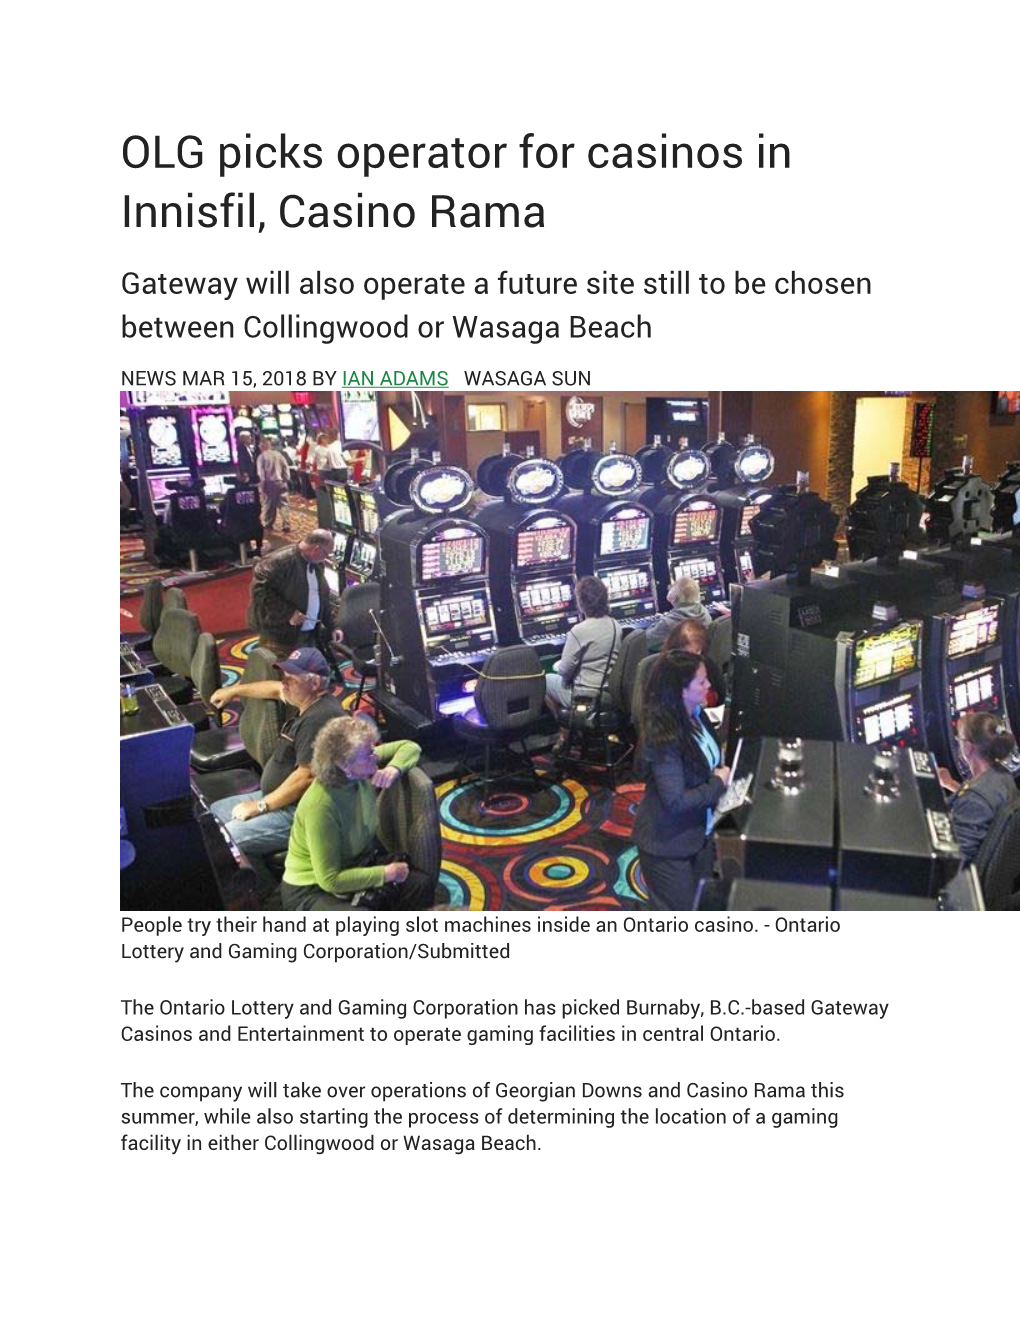 OLG Picks Operator for Casinos in Innisfil, Casino Rama